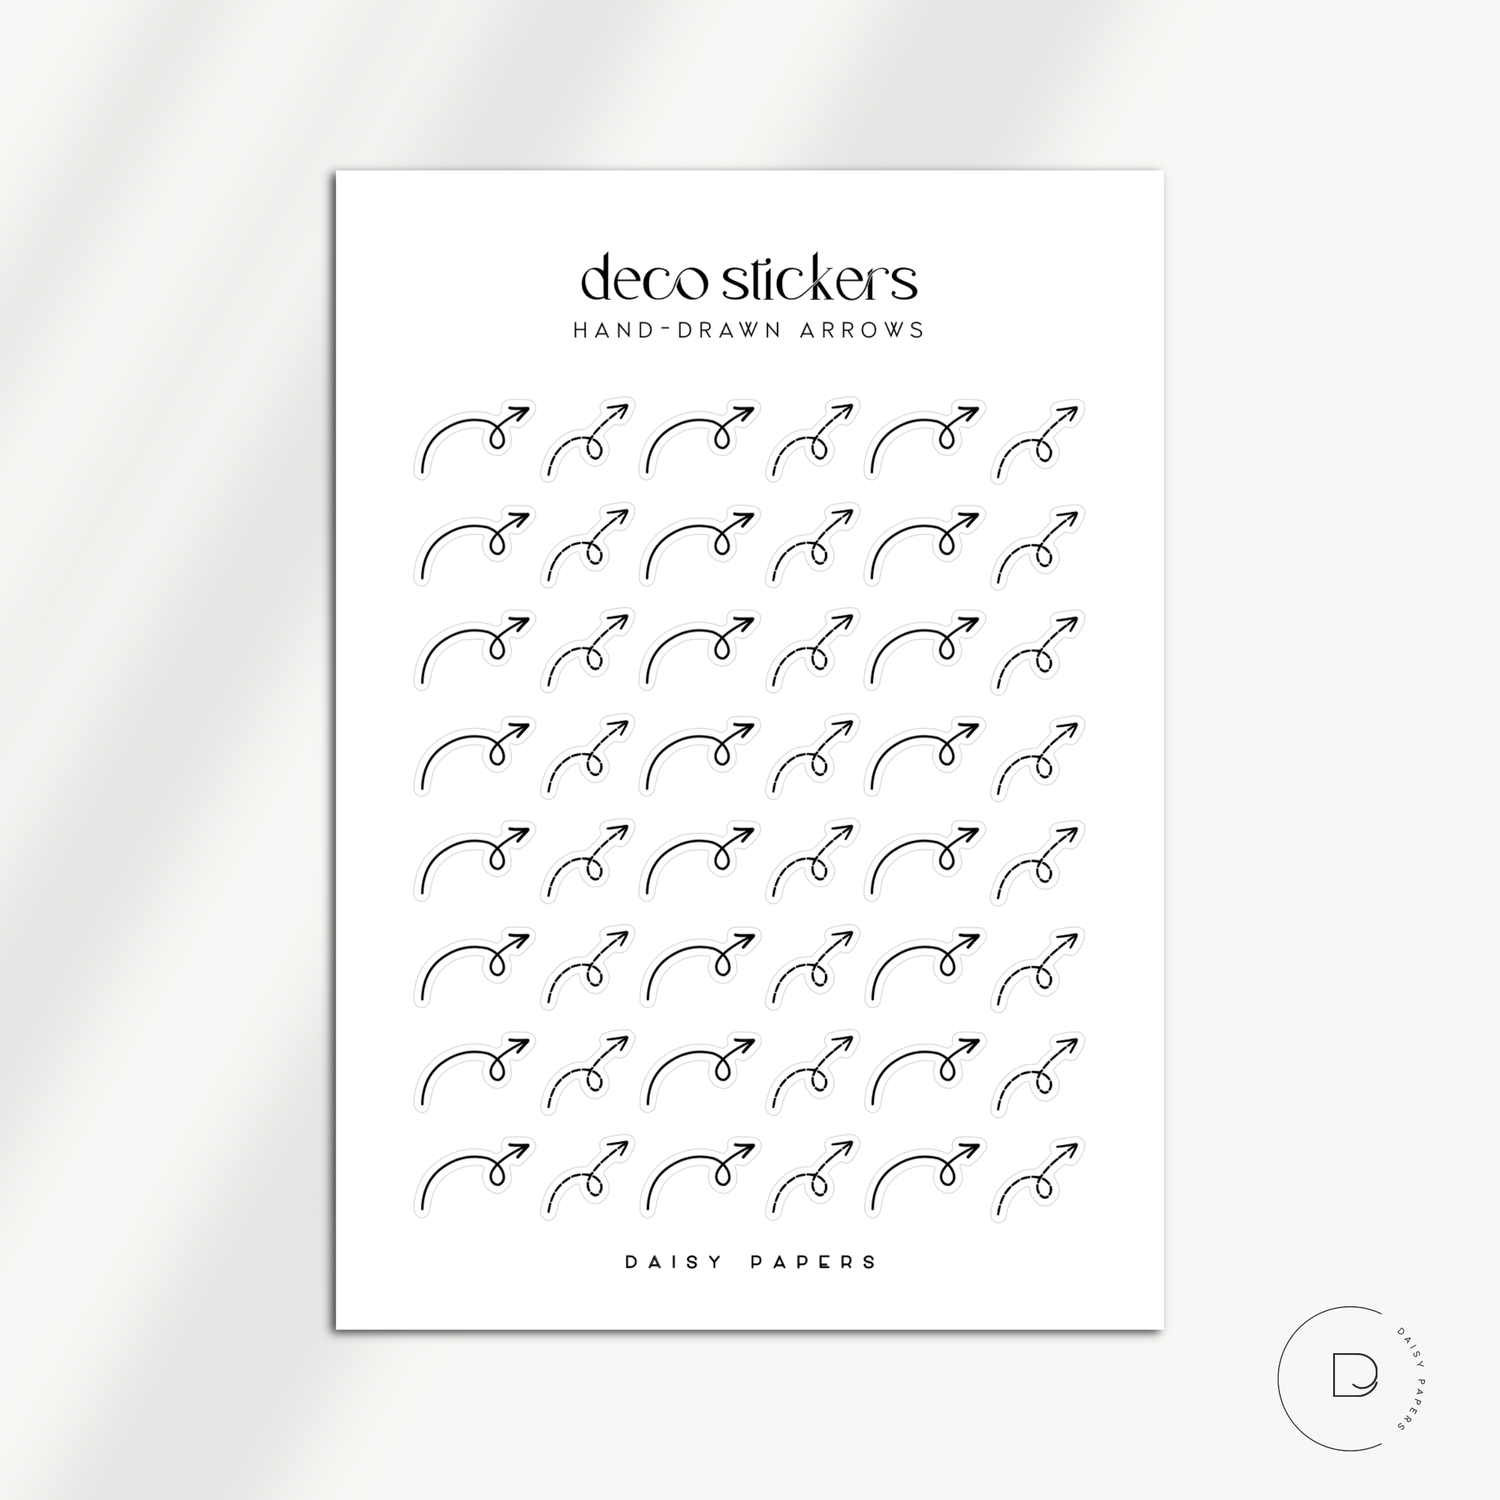 DECO STICKERS - HAND-DRAWN ARROWS